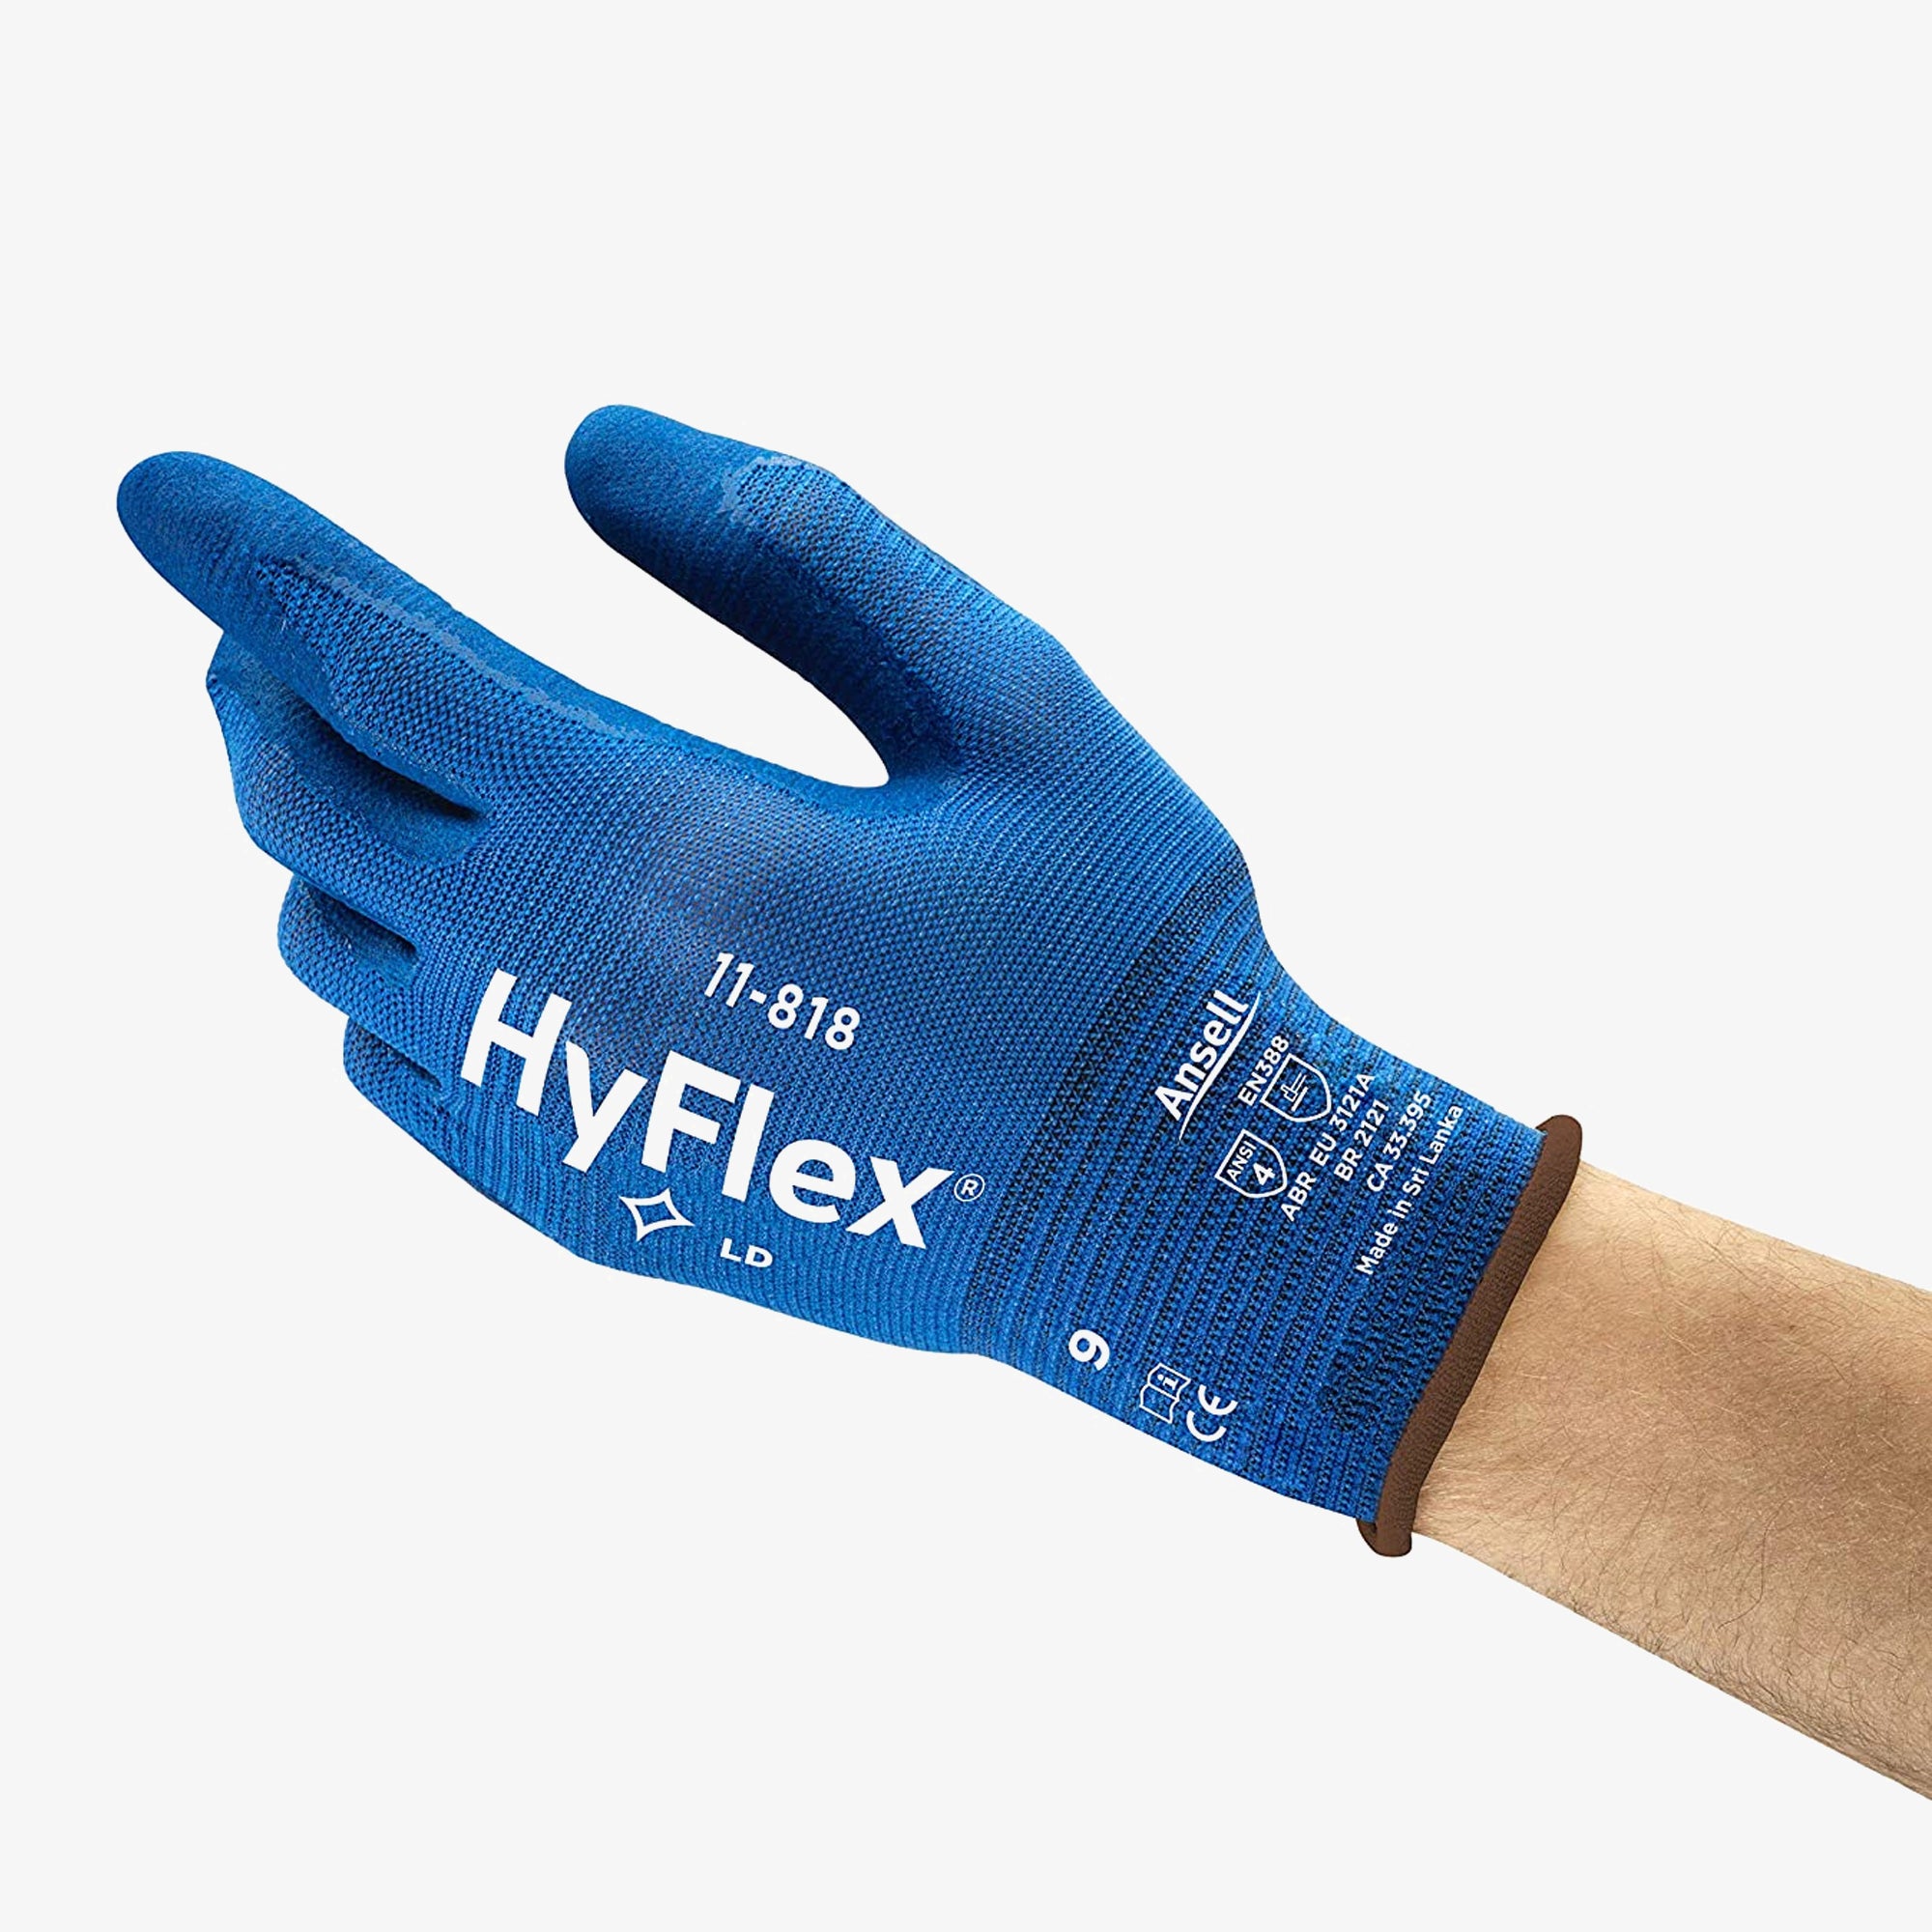 ANSELL HyFlex 11-818 Zaštitne rukavice